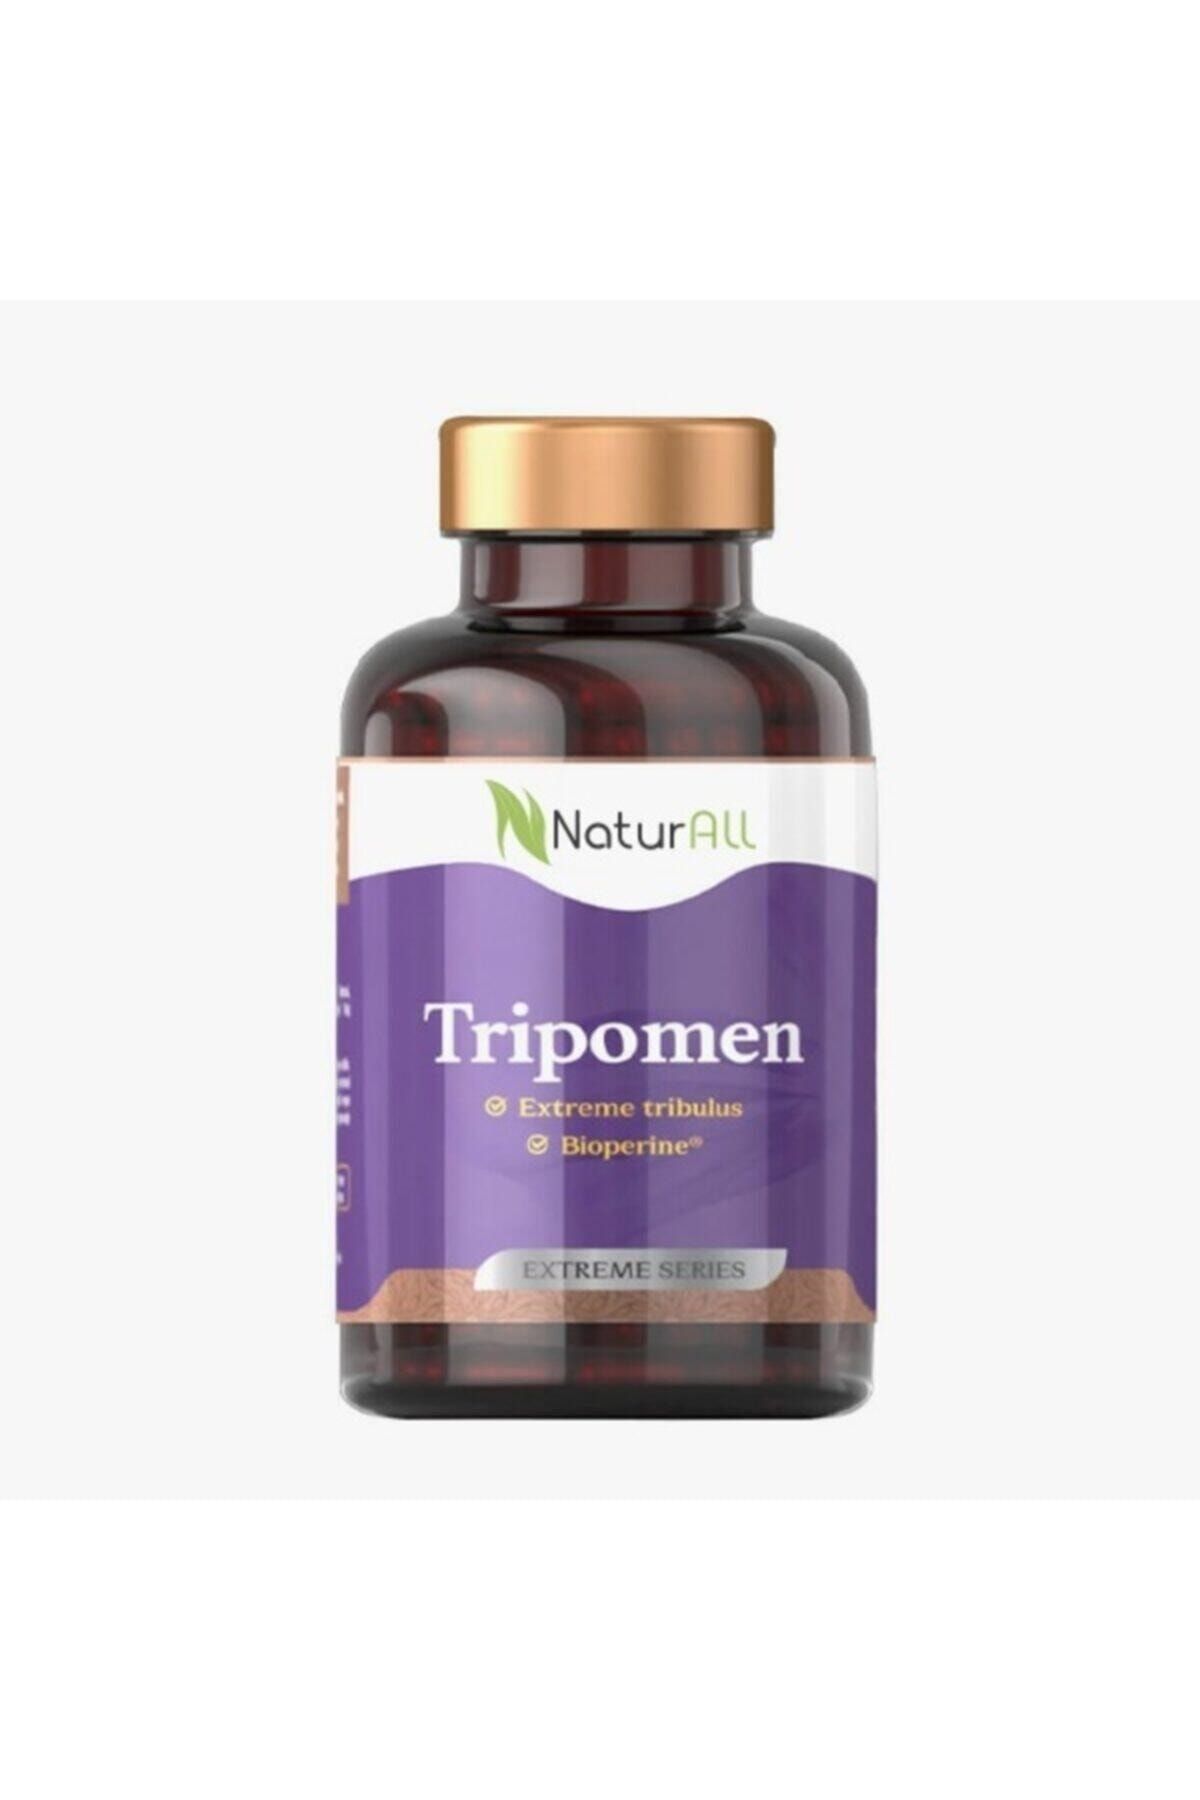 Naturall Tripomen